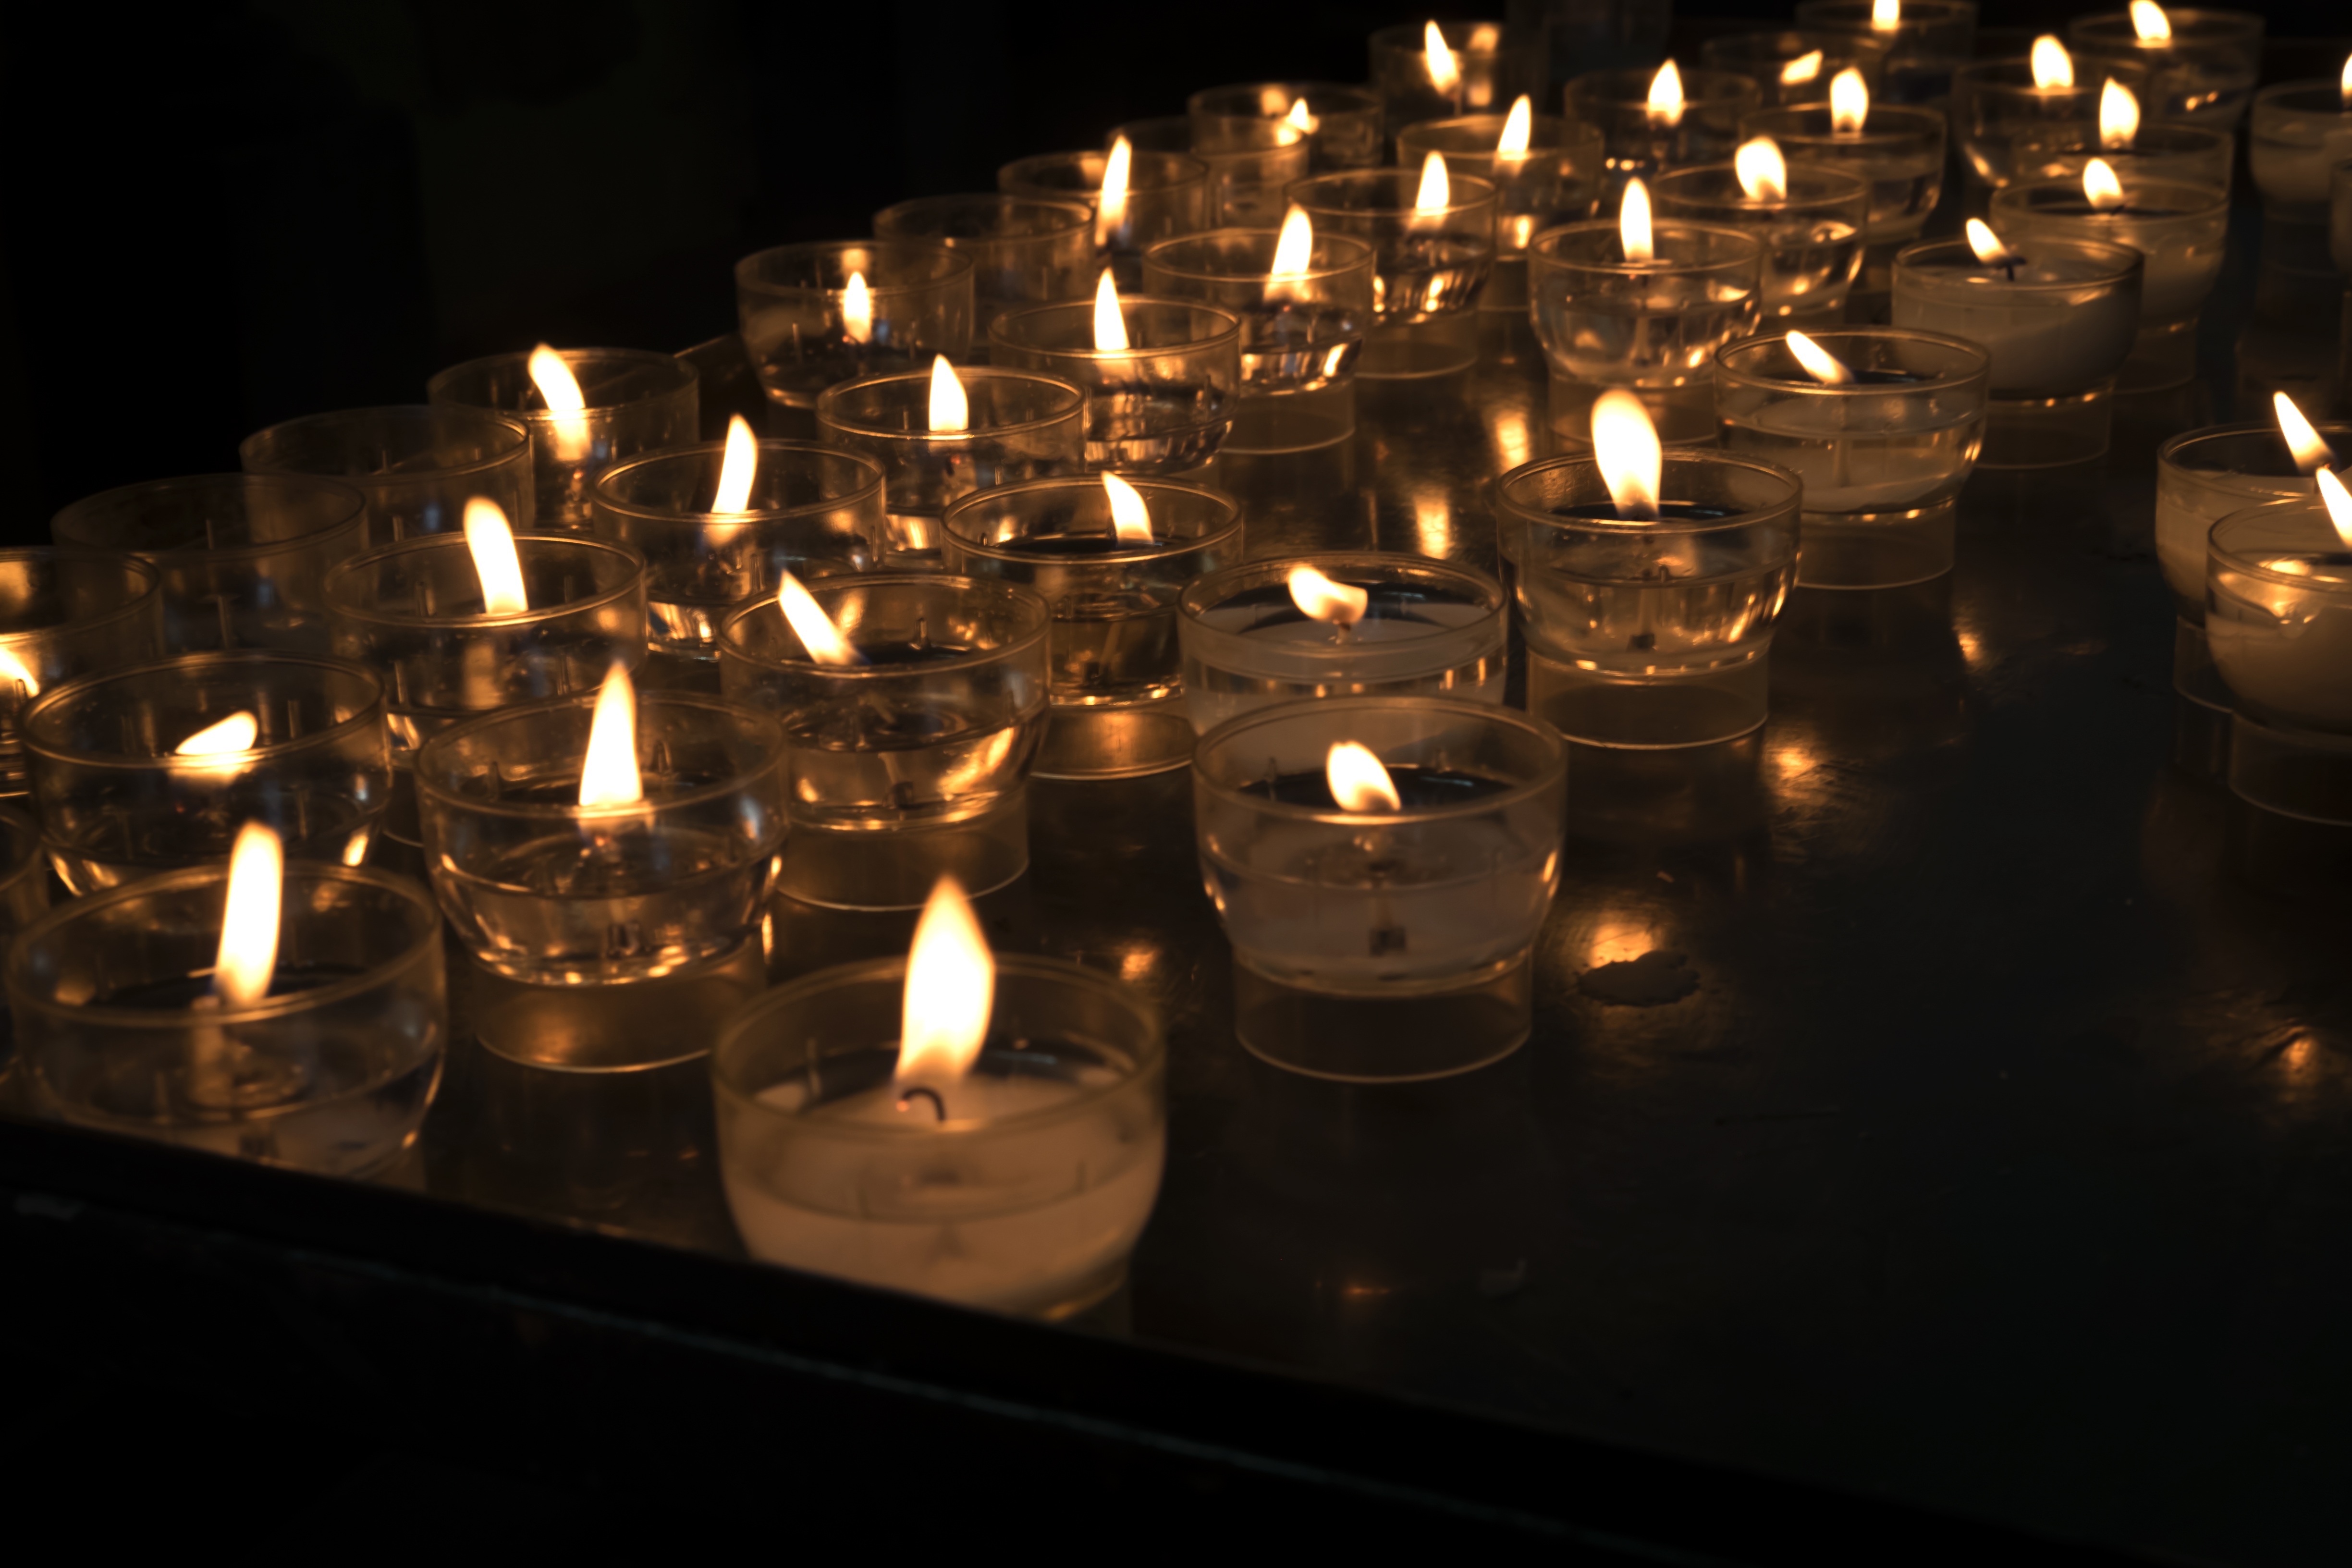 Фото свечи в темноте. Свеча в темноте. Много свечей. Много свечей в темноте. Освещение свечами.